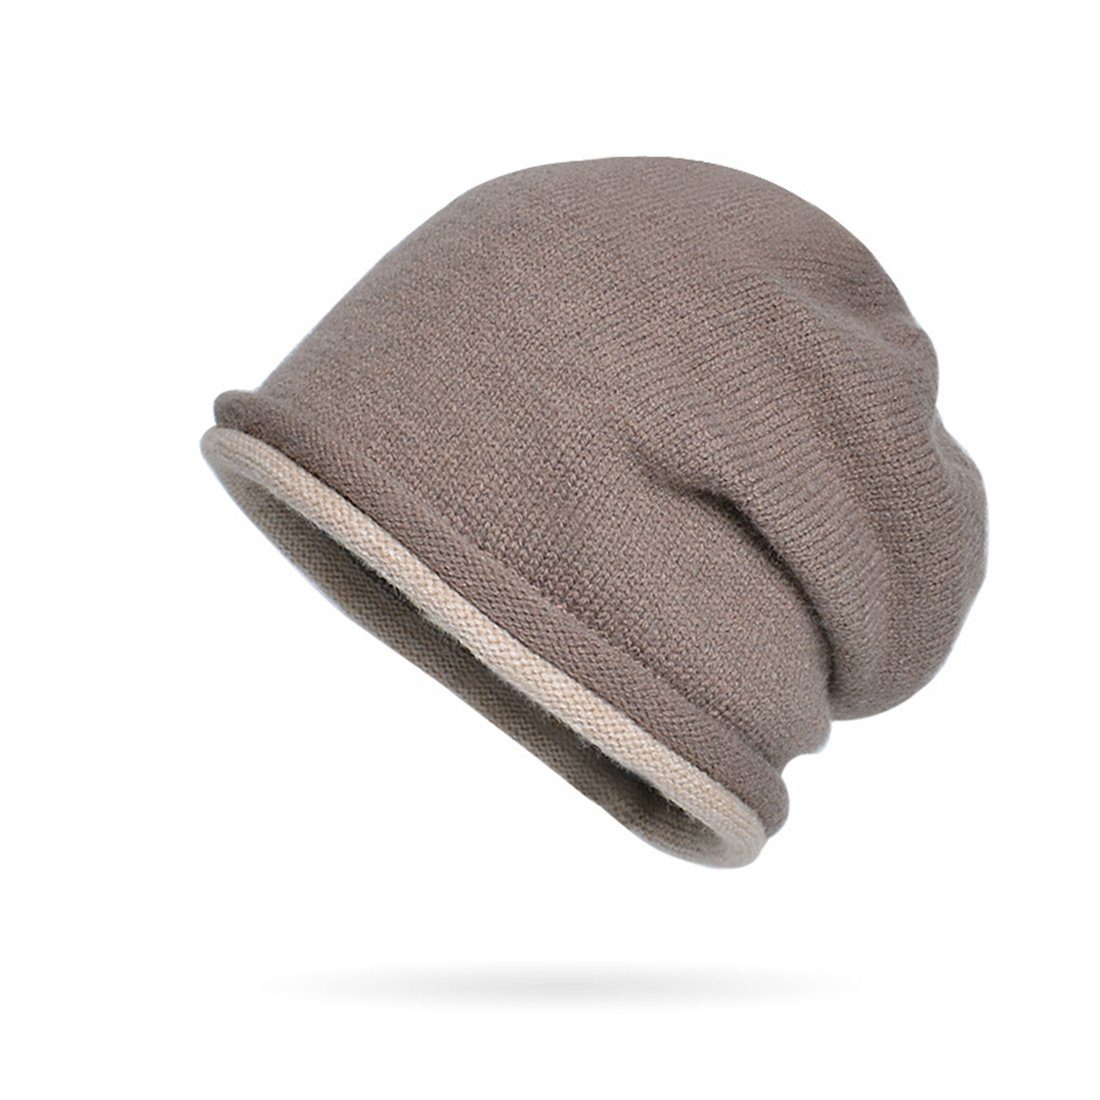 Kopfmütze,gestapelte khaki Strickmütze,Ohrenschutz warme Strickmütze DÖRÖY Unisex Winter Mütze